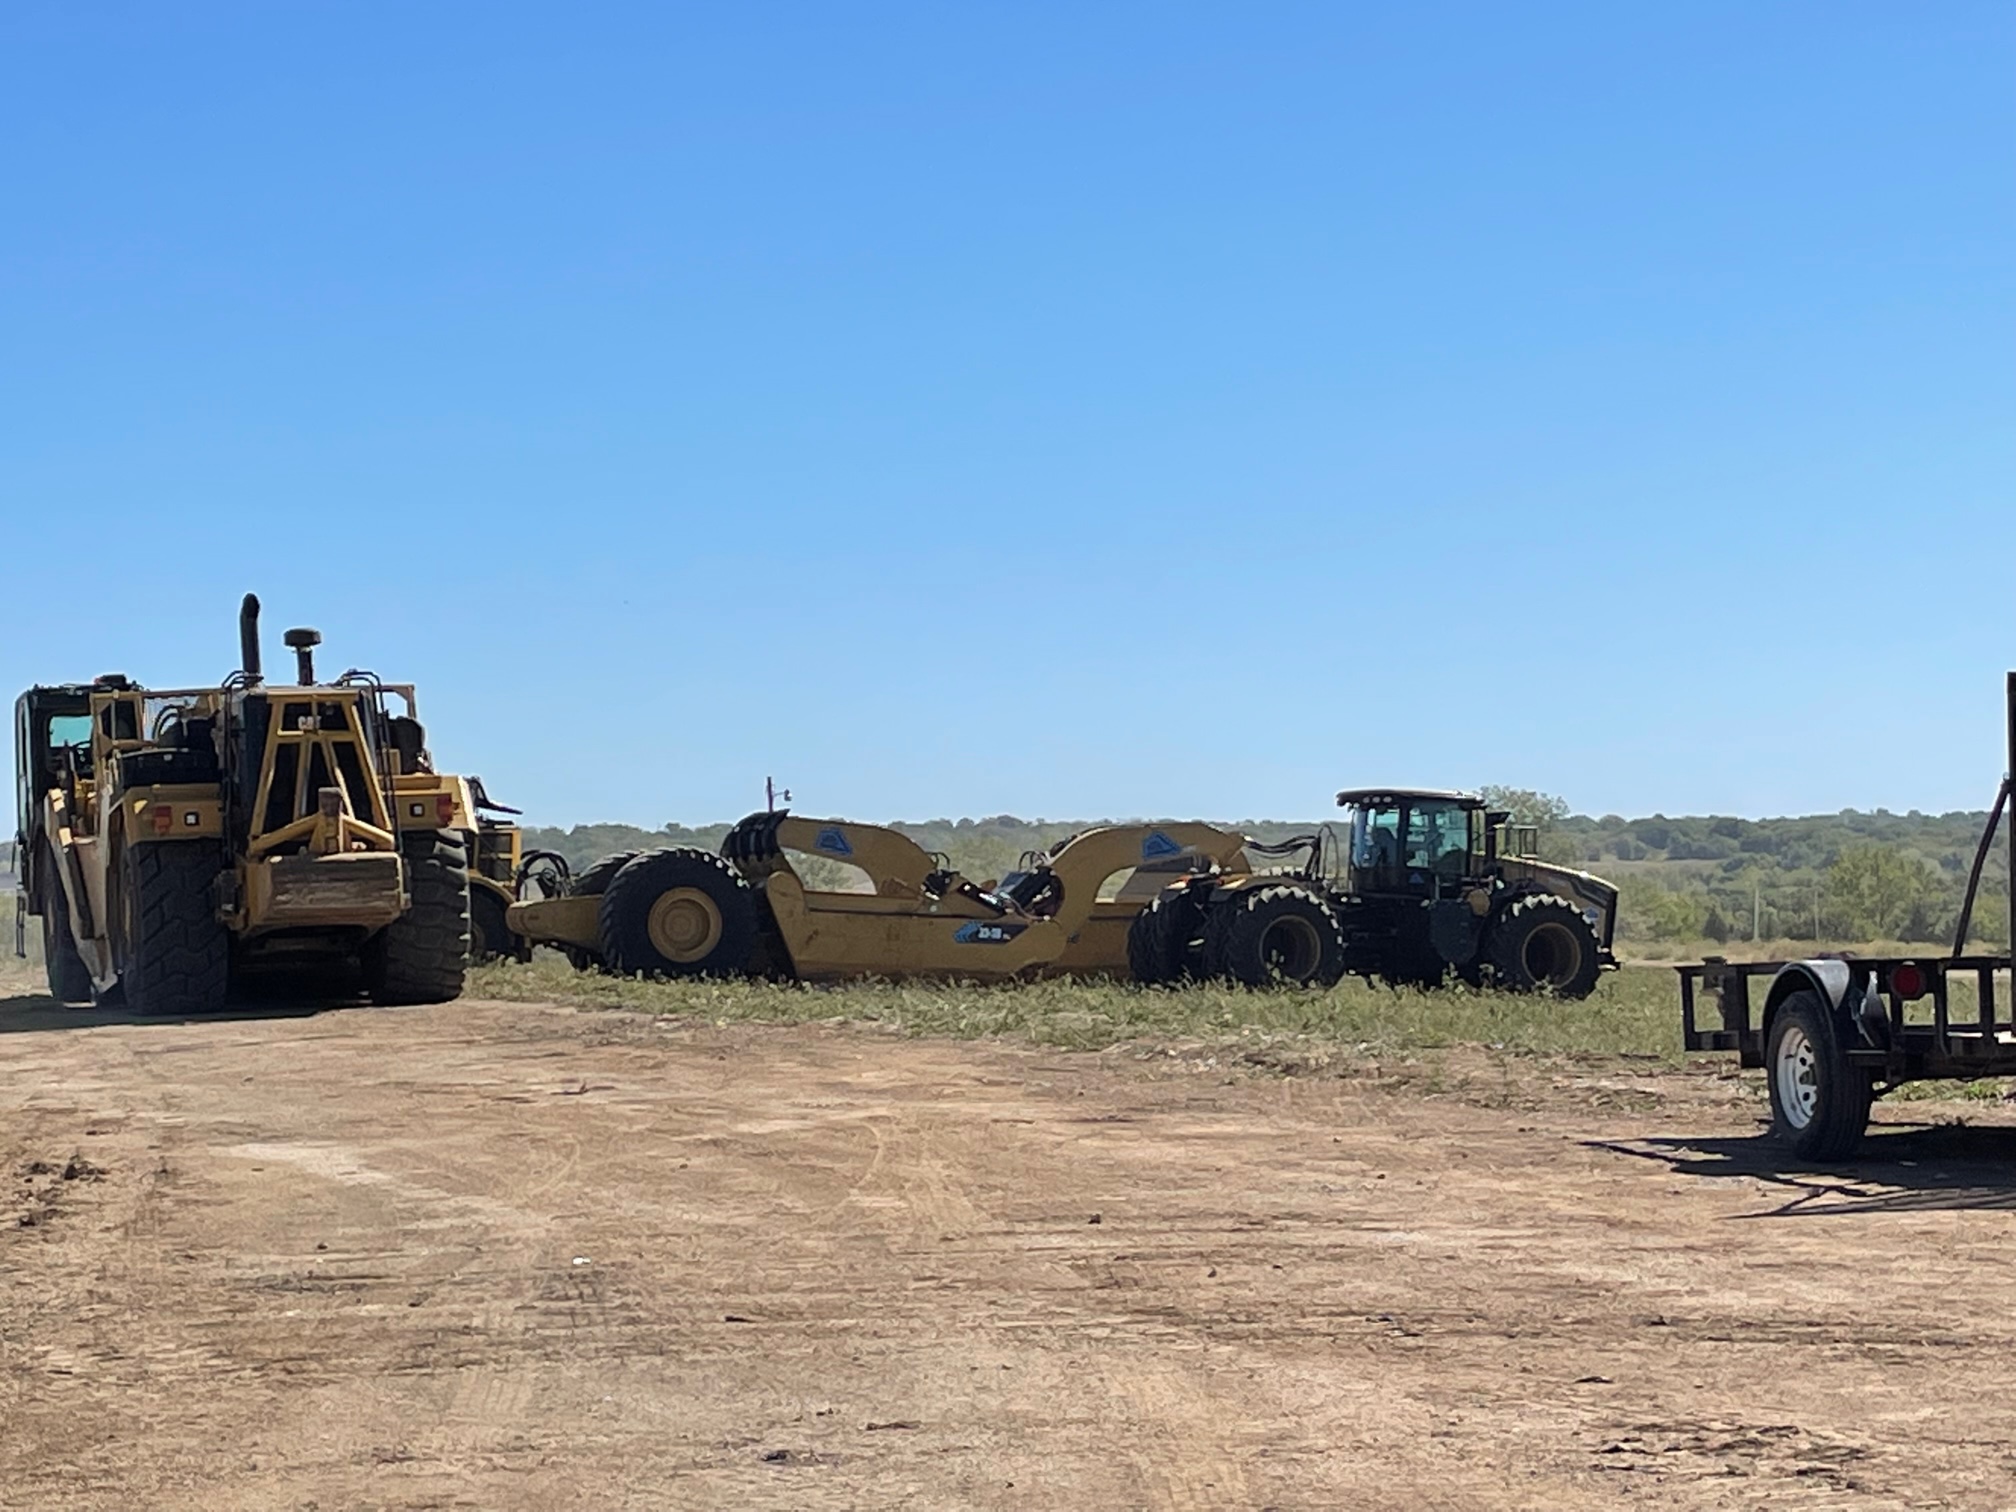 Excavators begin ground breaking for the new Panasonic EV battery facility in De Soto, Kansas